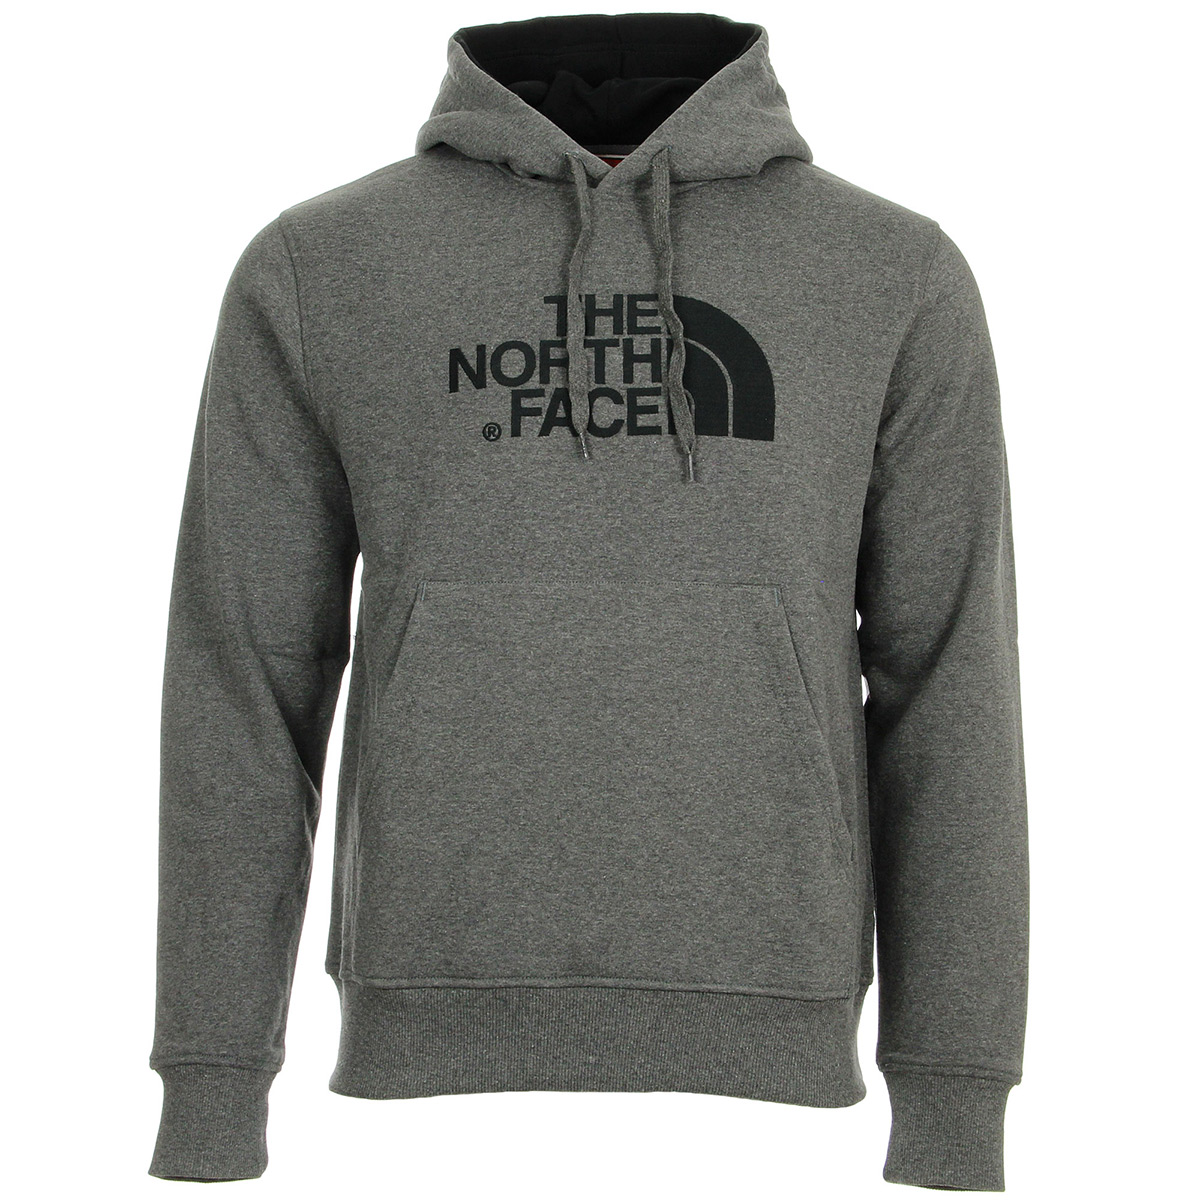 The North Face Drew Peak Pullover Hoodie